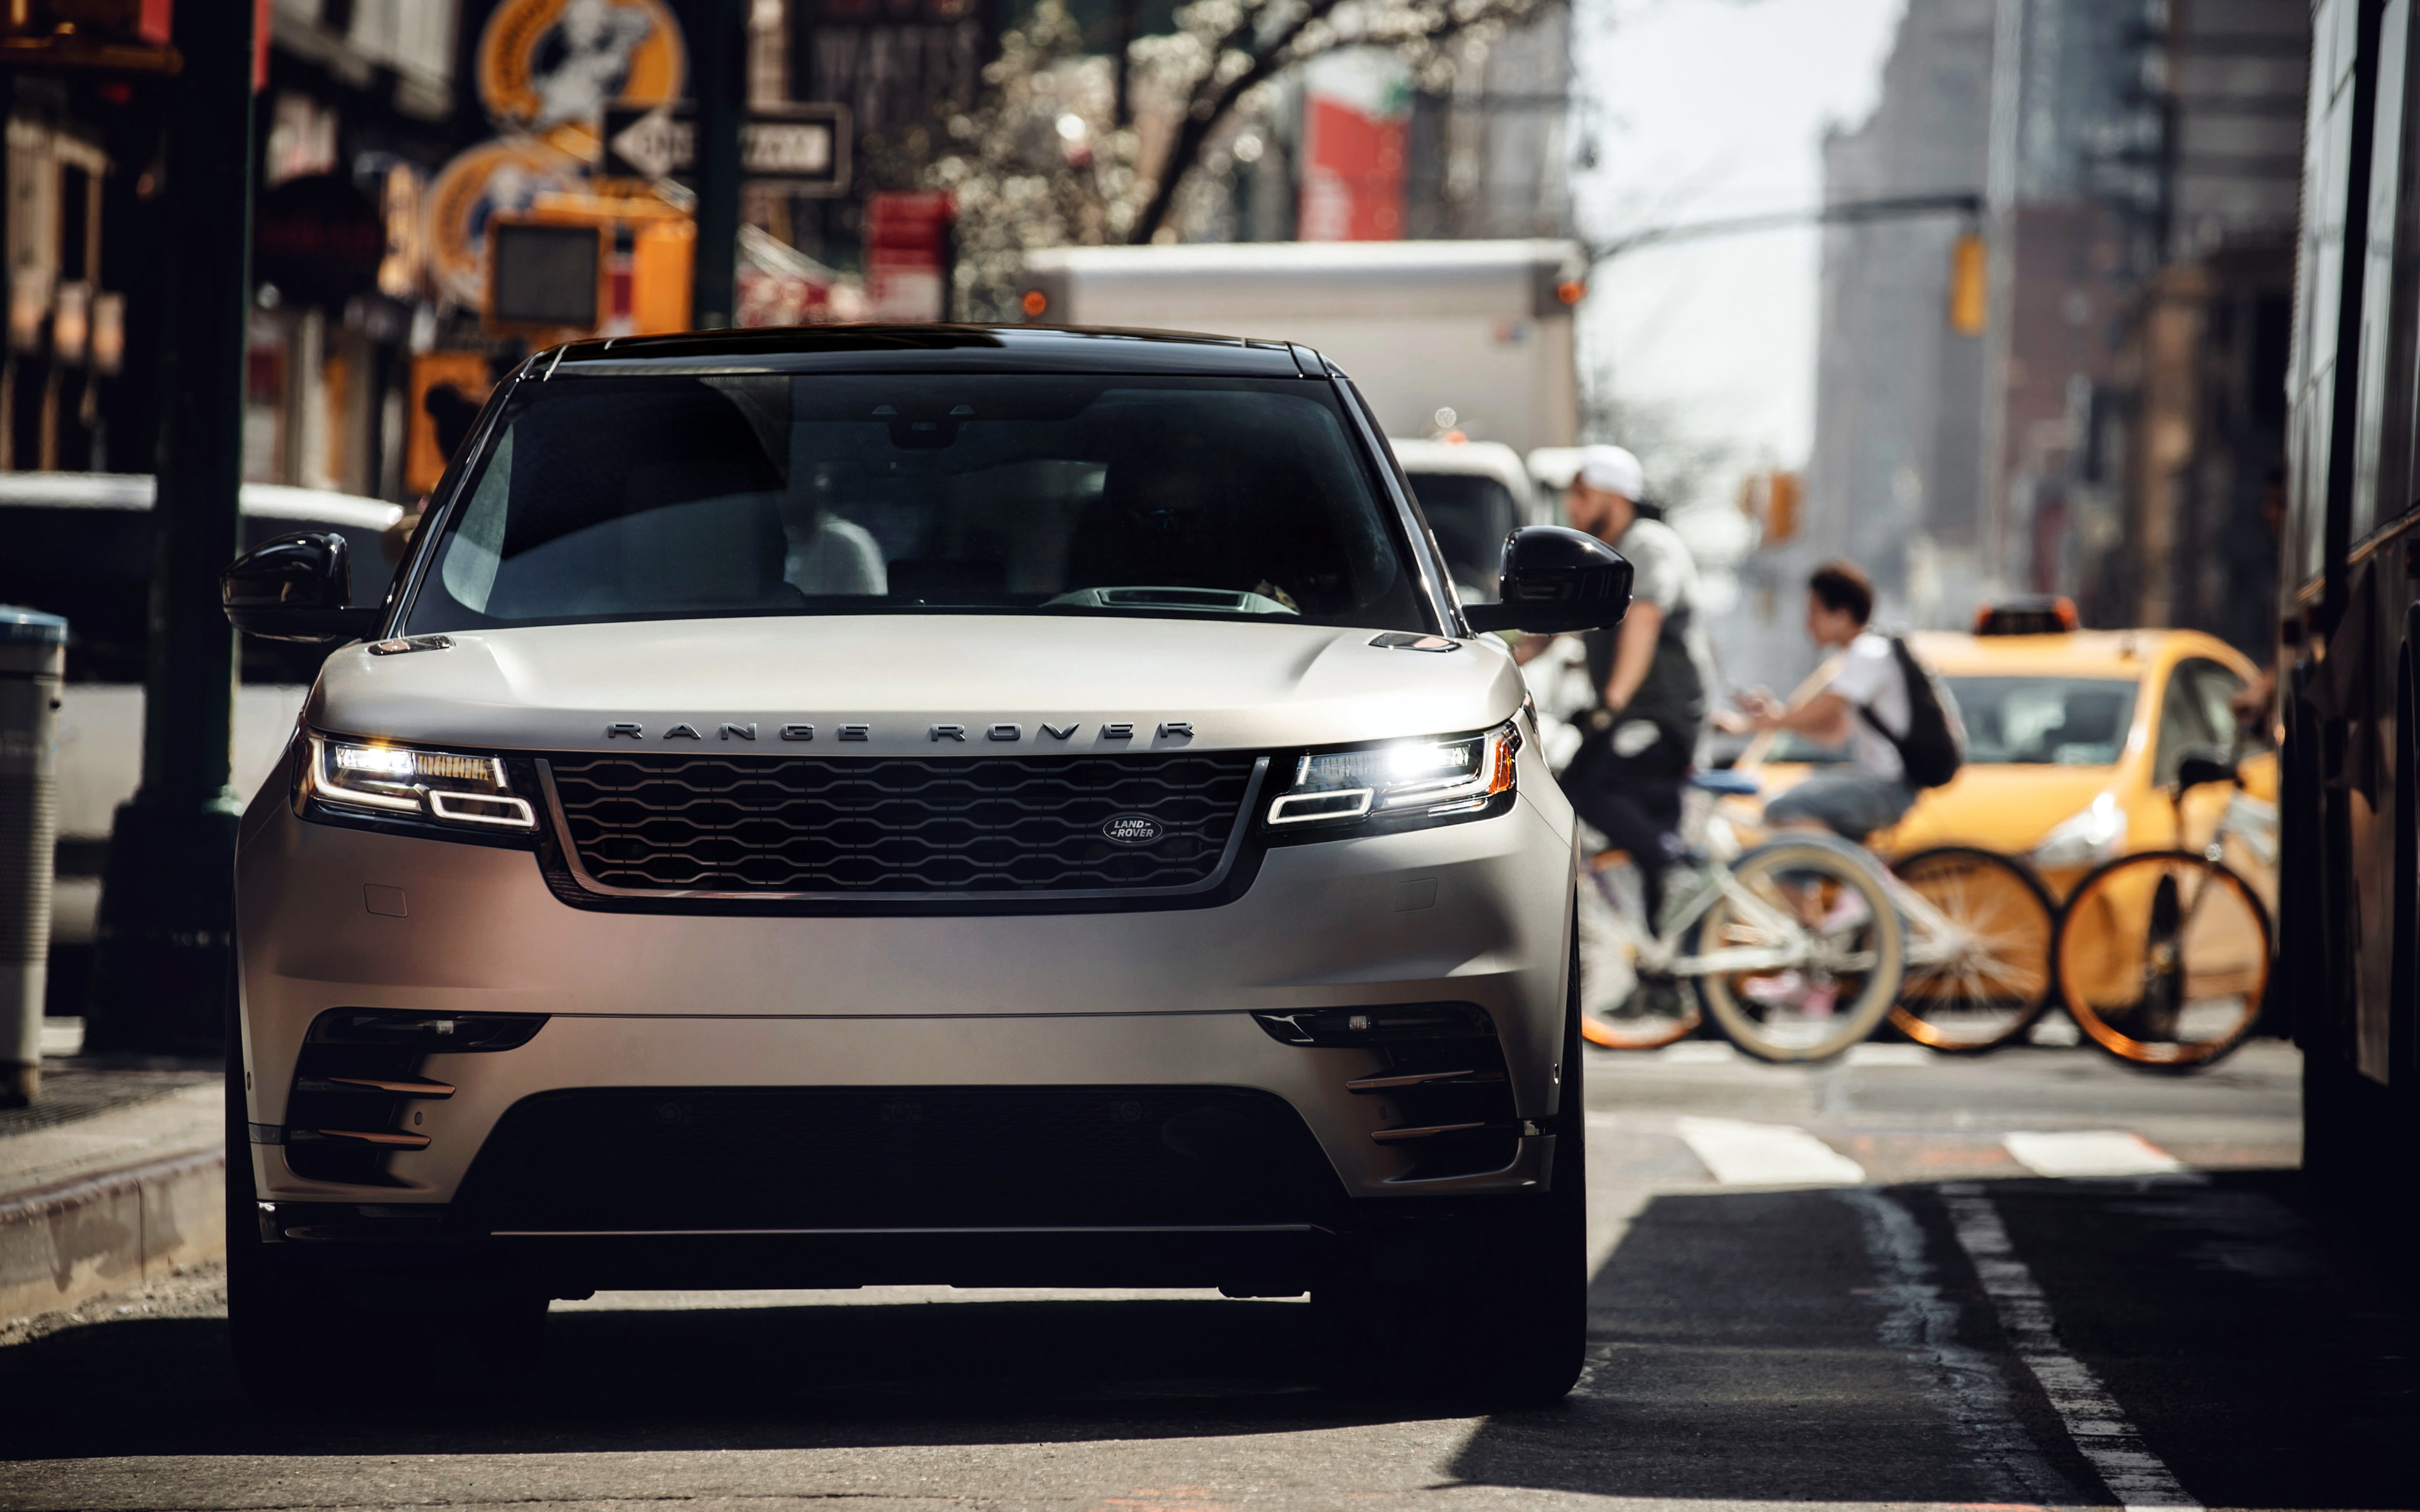 Range Rover Velar, vehicle, SUV, car, street, city, depth of field